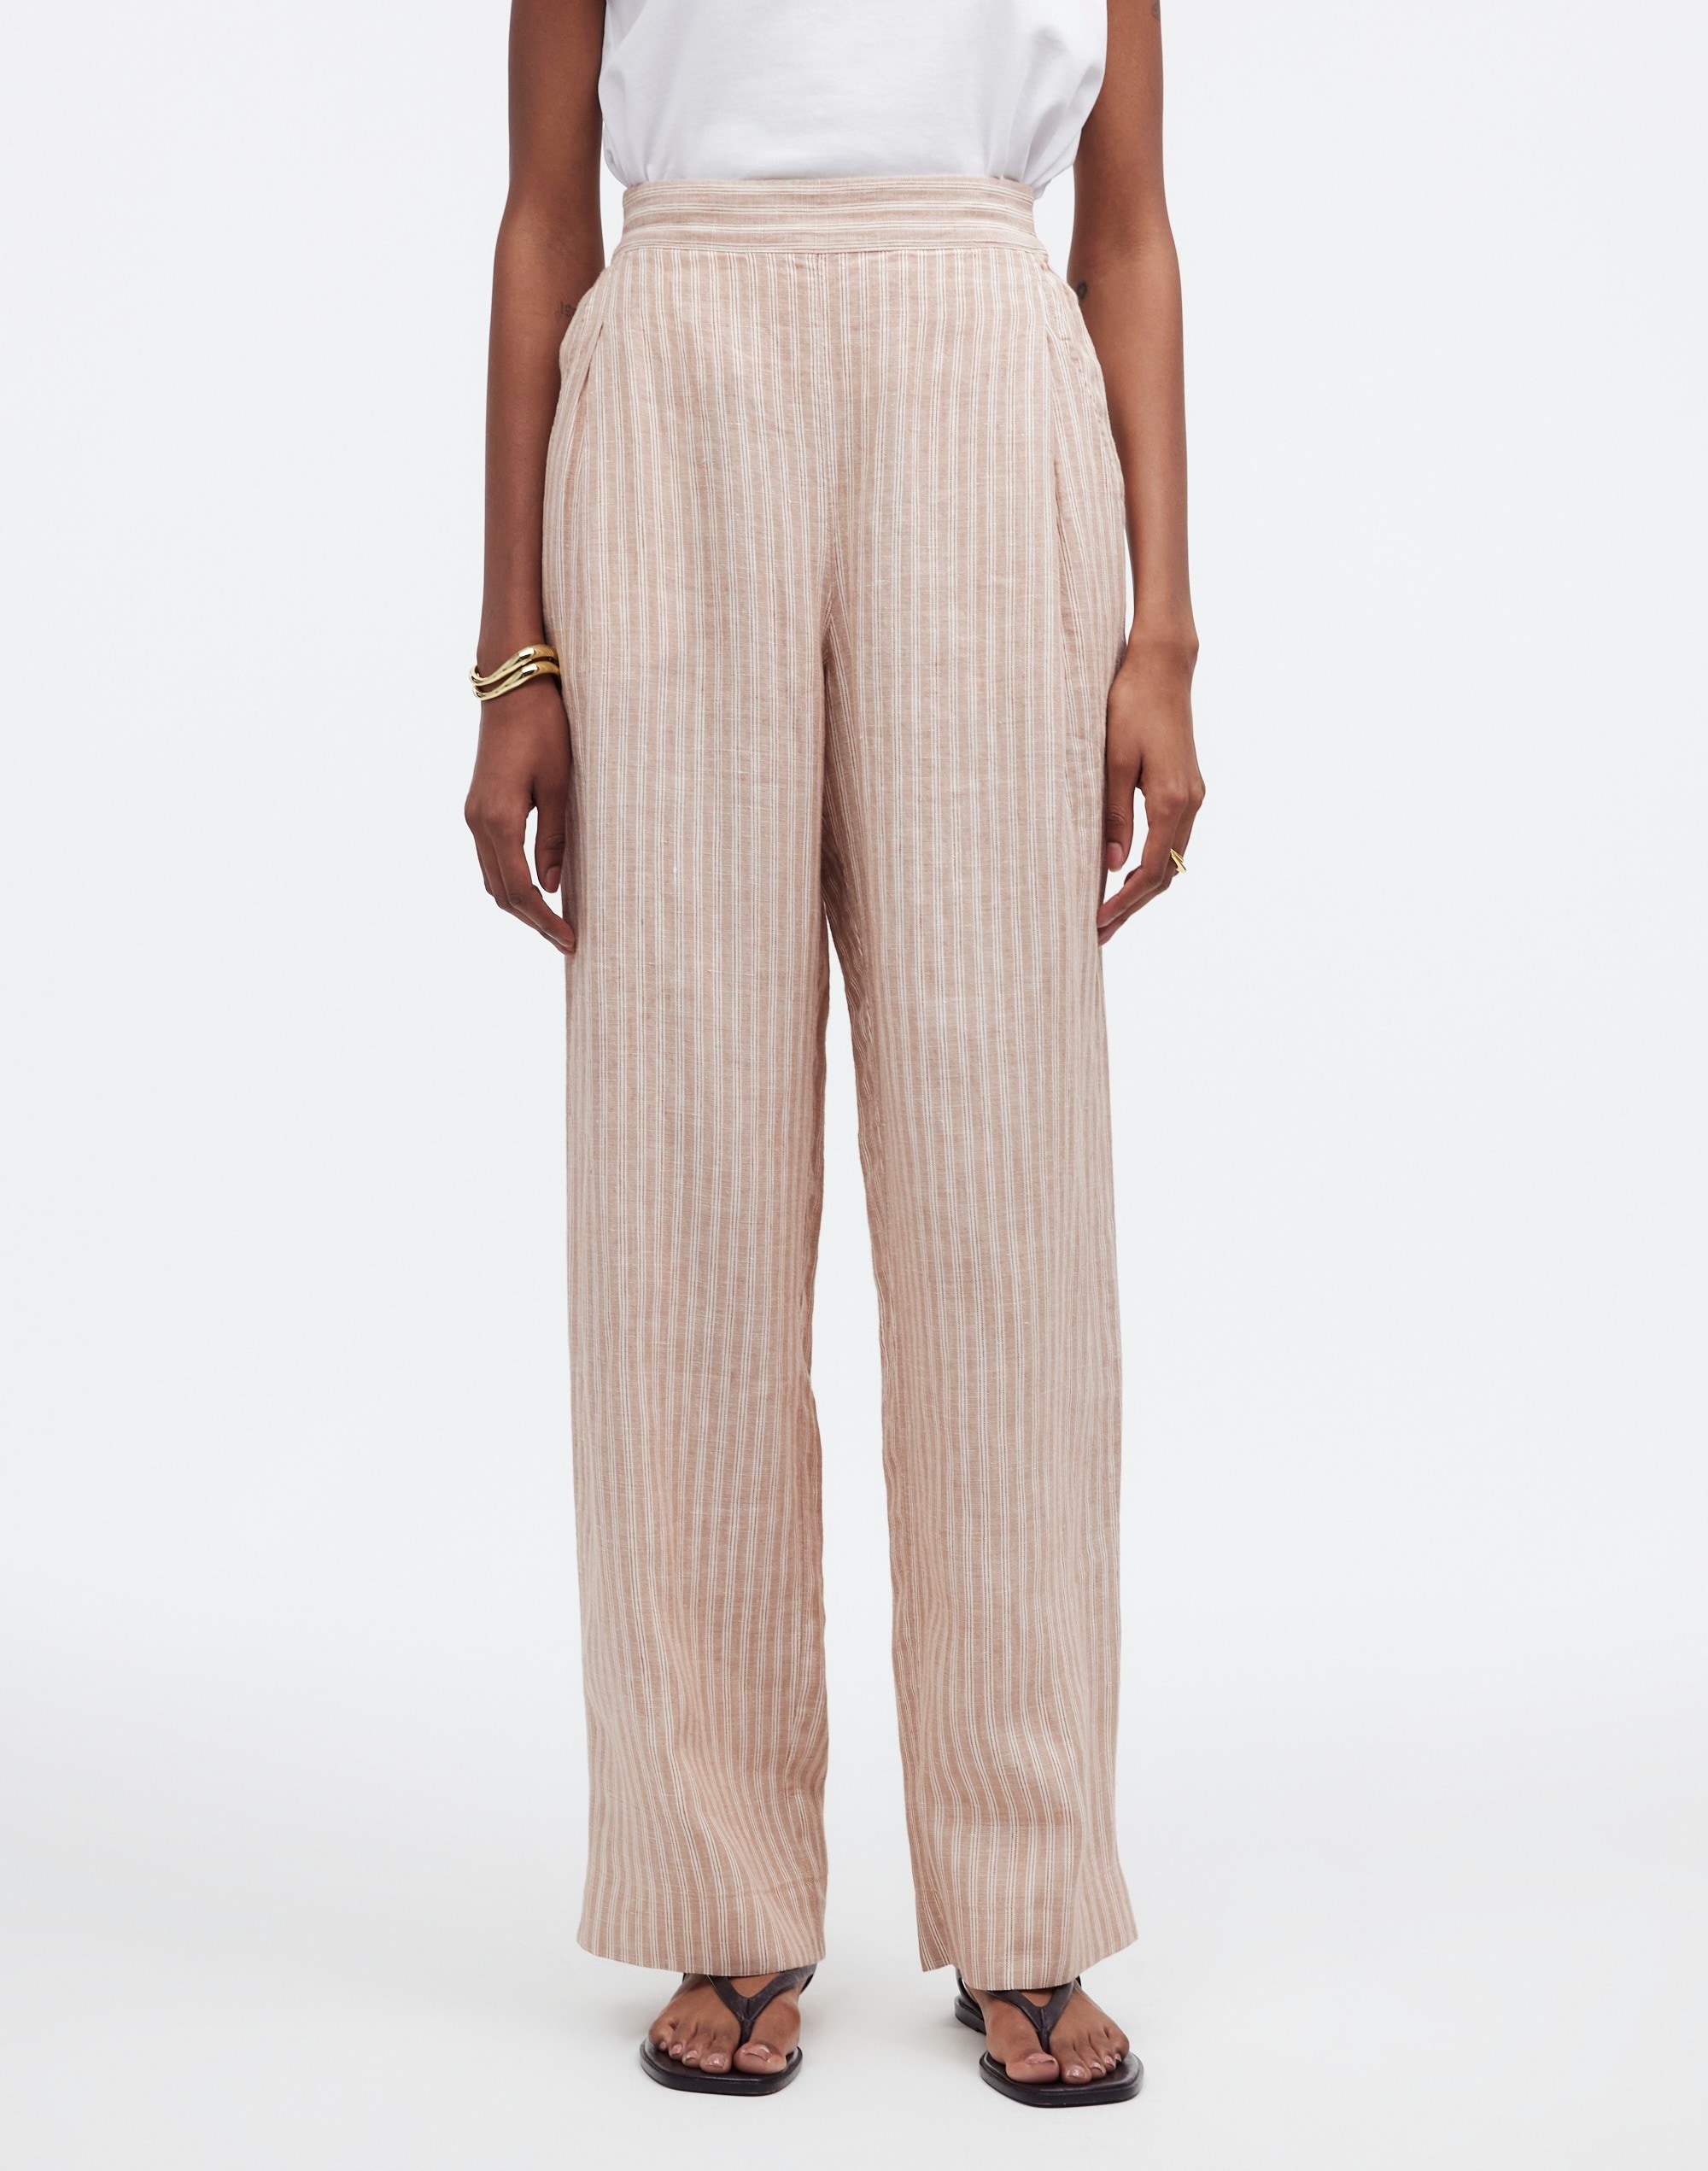 Pull-On Straight Crop Pants 100% Linen